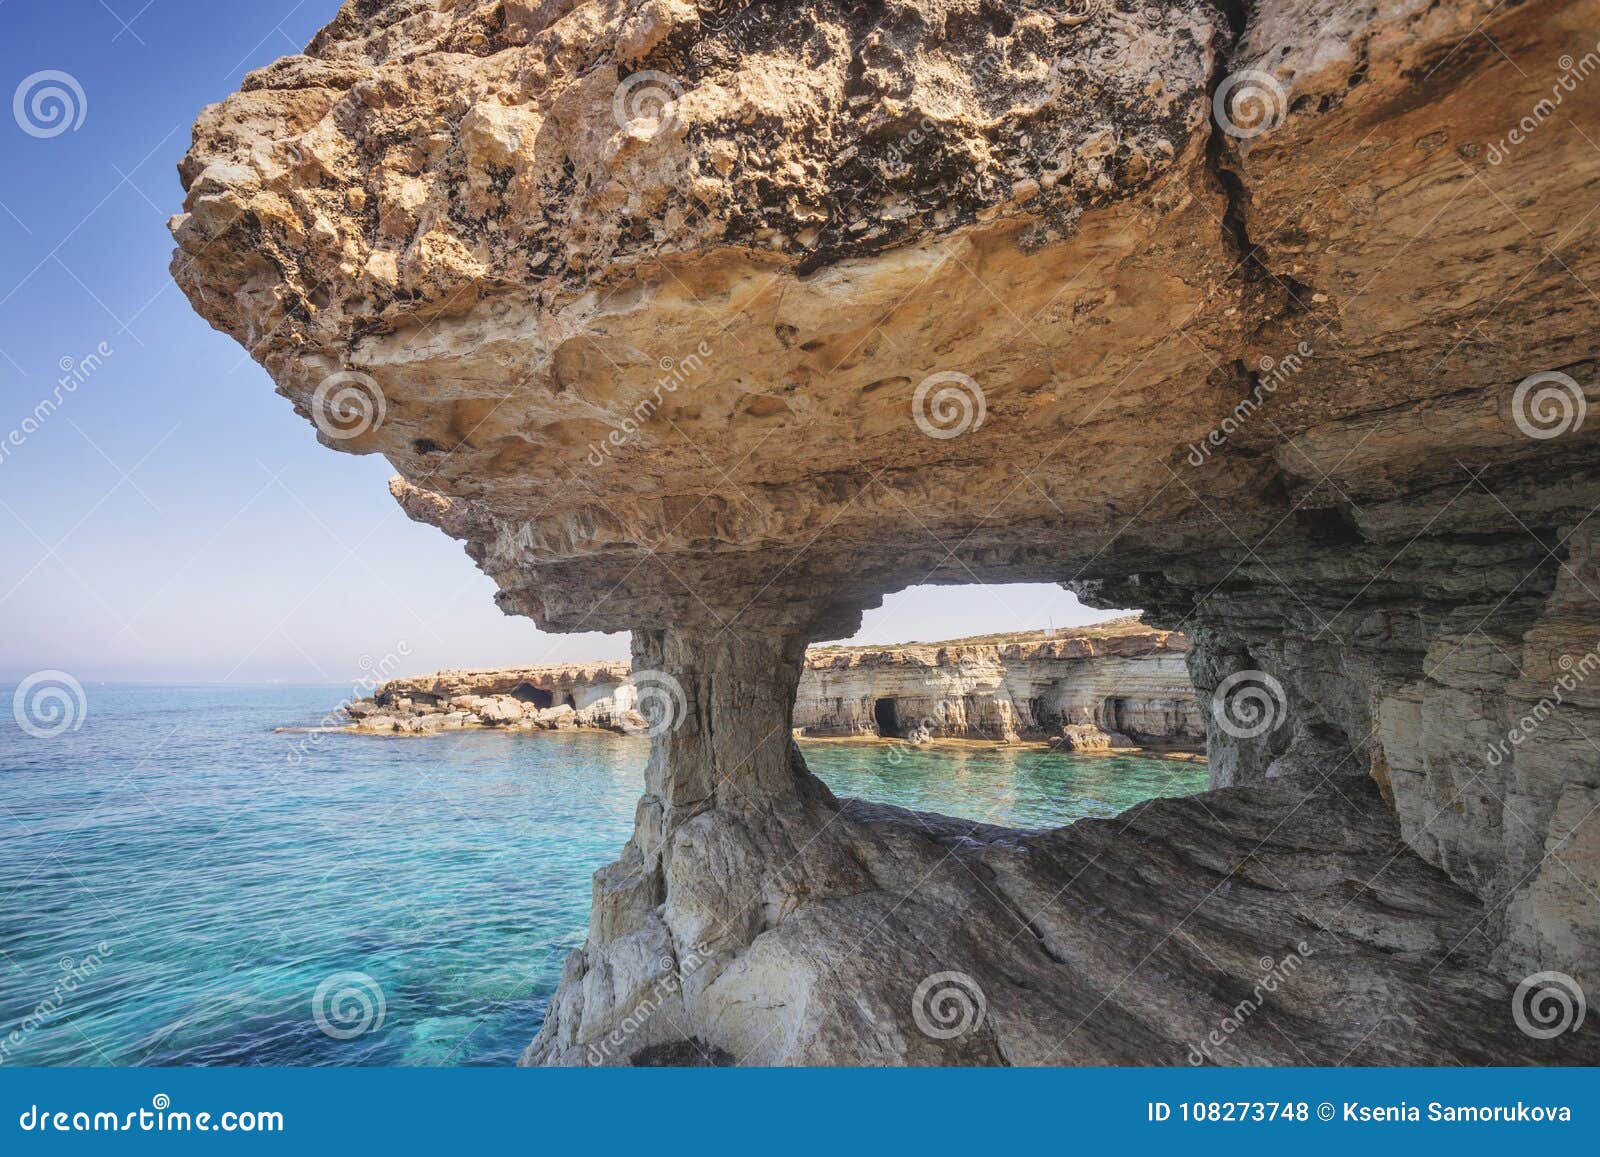 ayia napa, cyprus. sea caves of cavo greco cape.